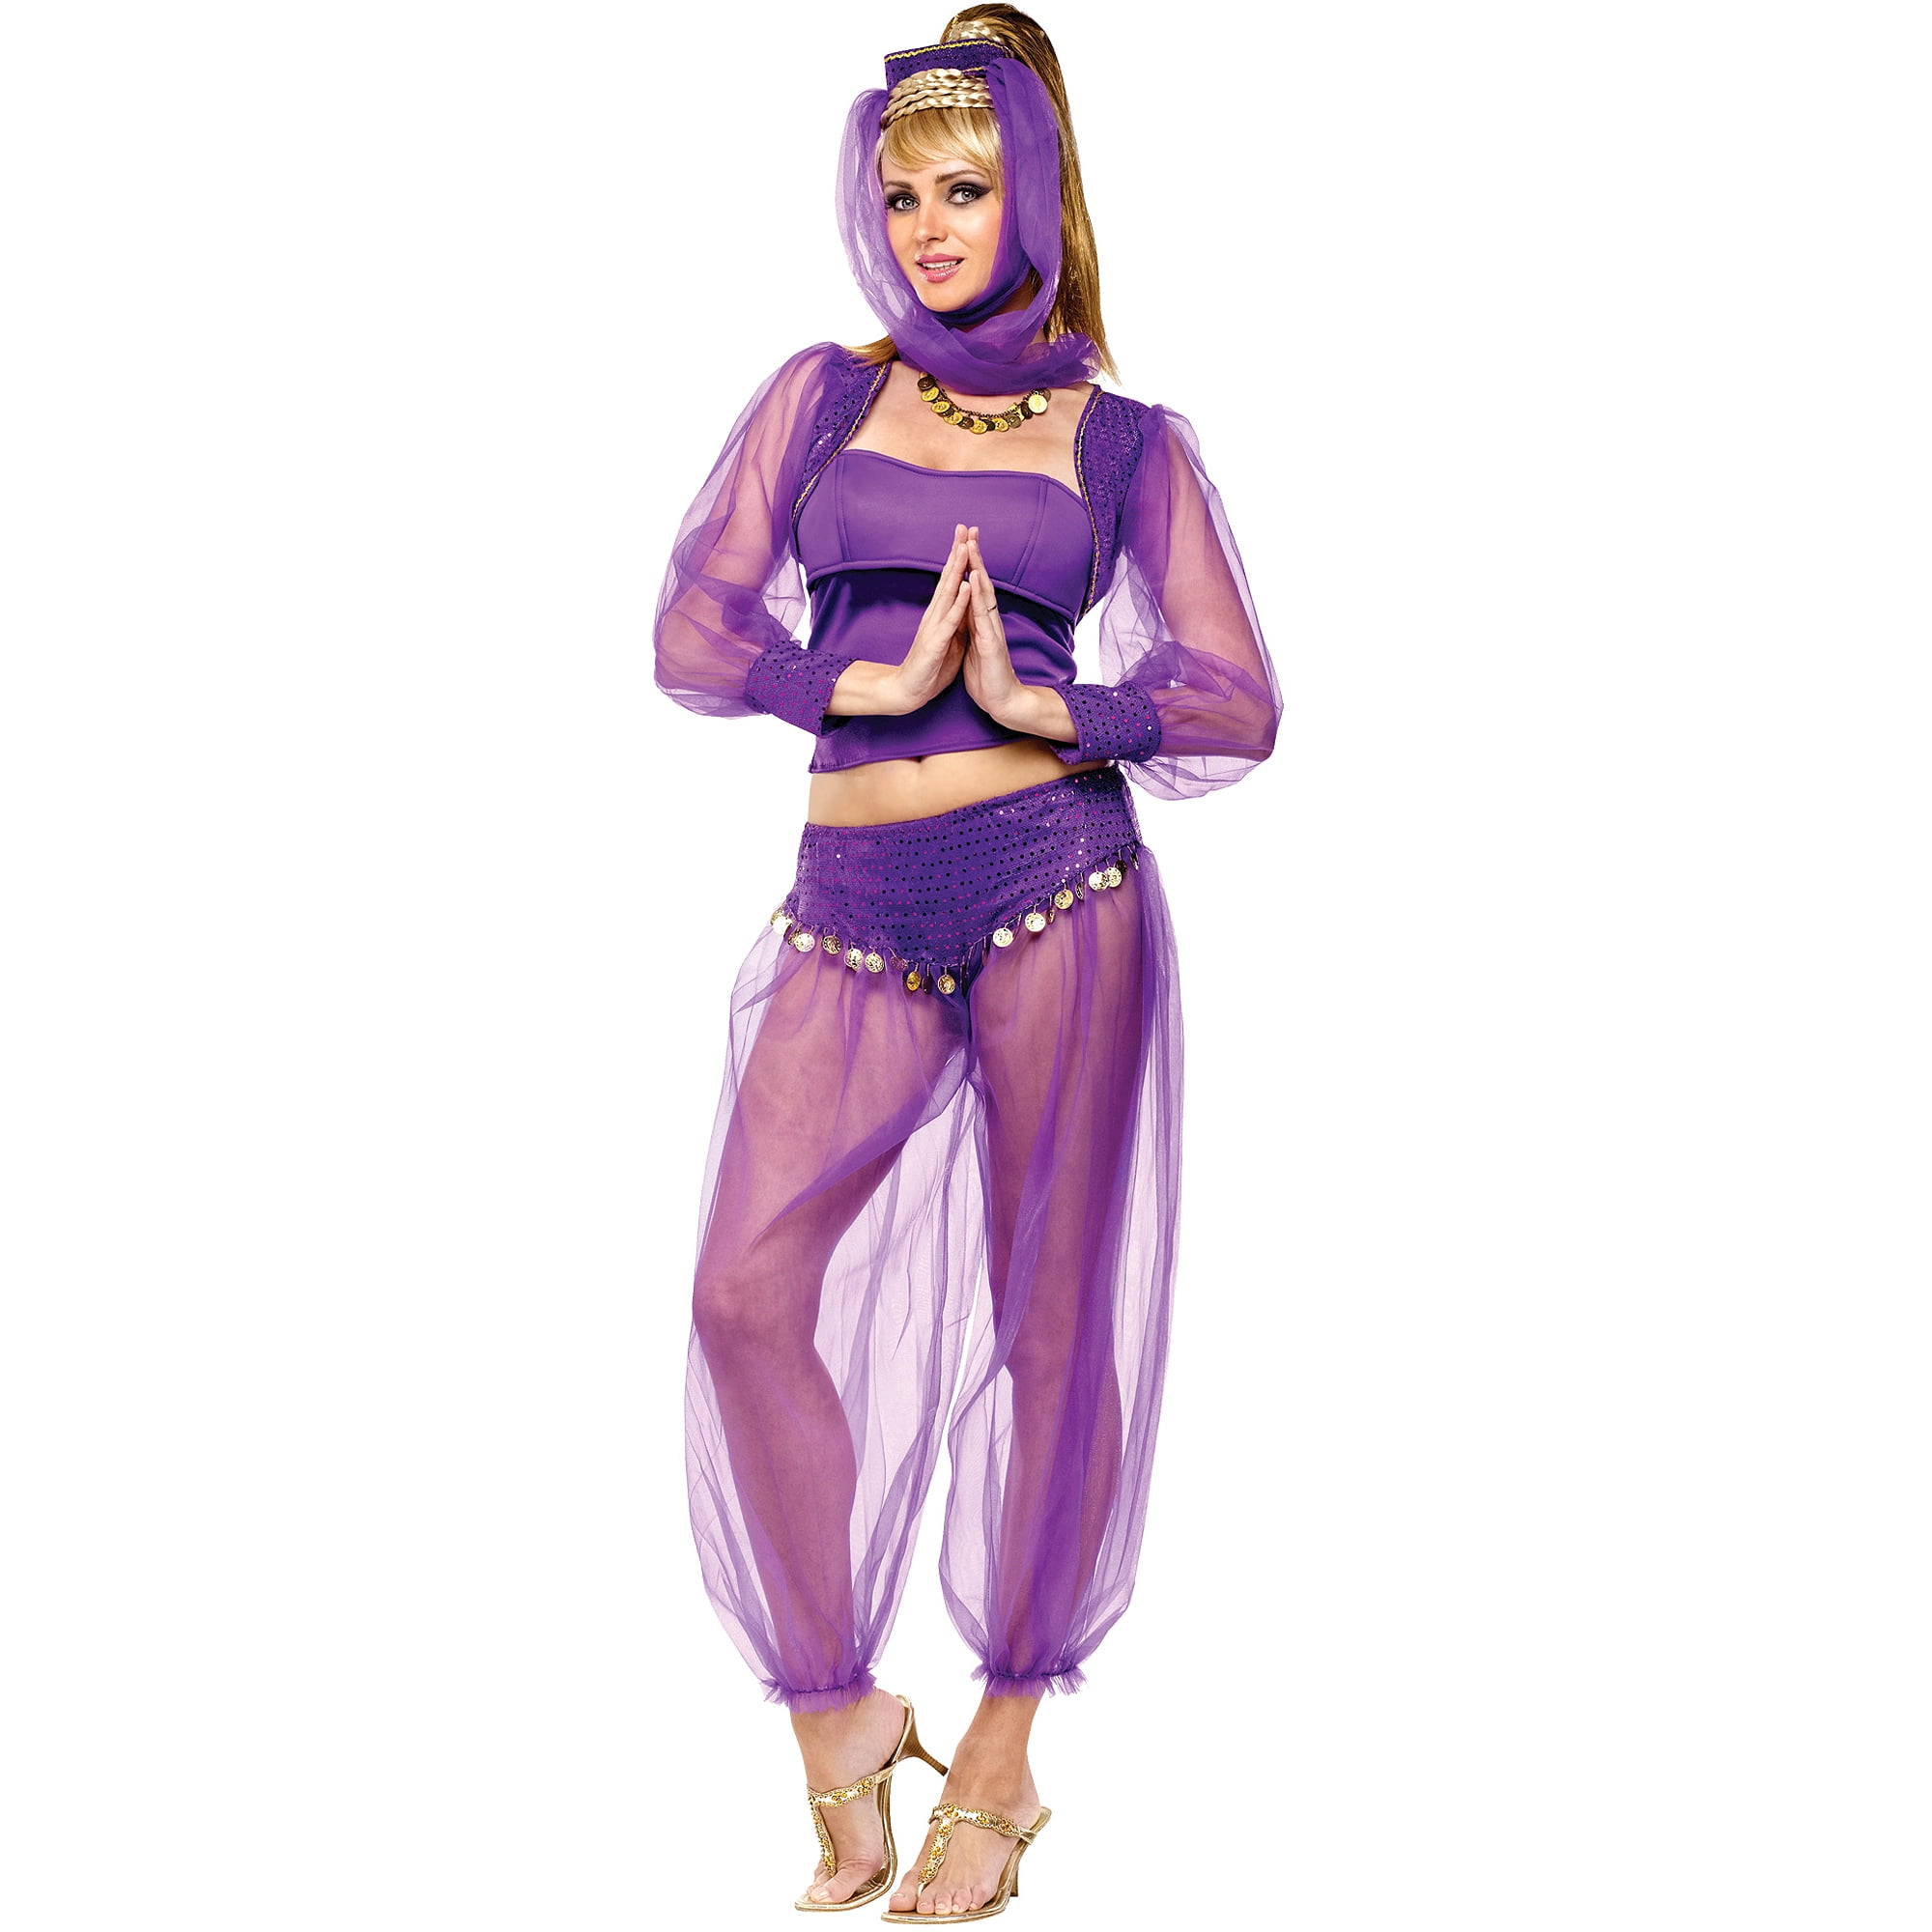 Dreamy Genie Women's Halloween Fancy-Dress Costume for Adult, S-M